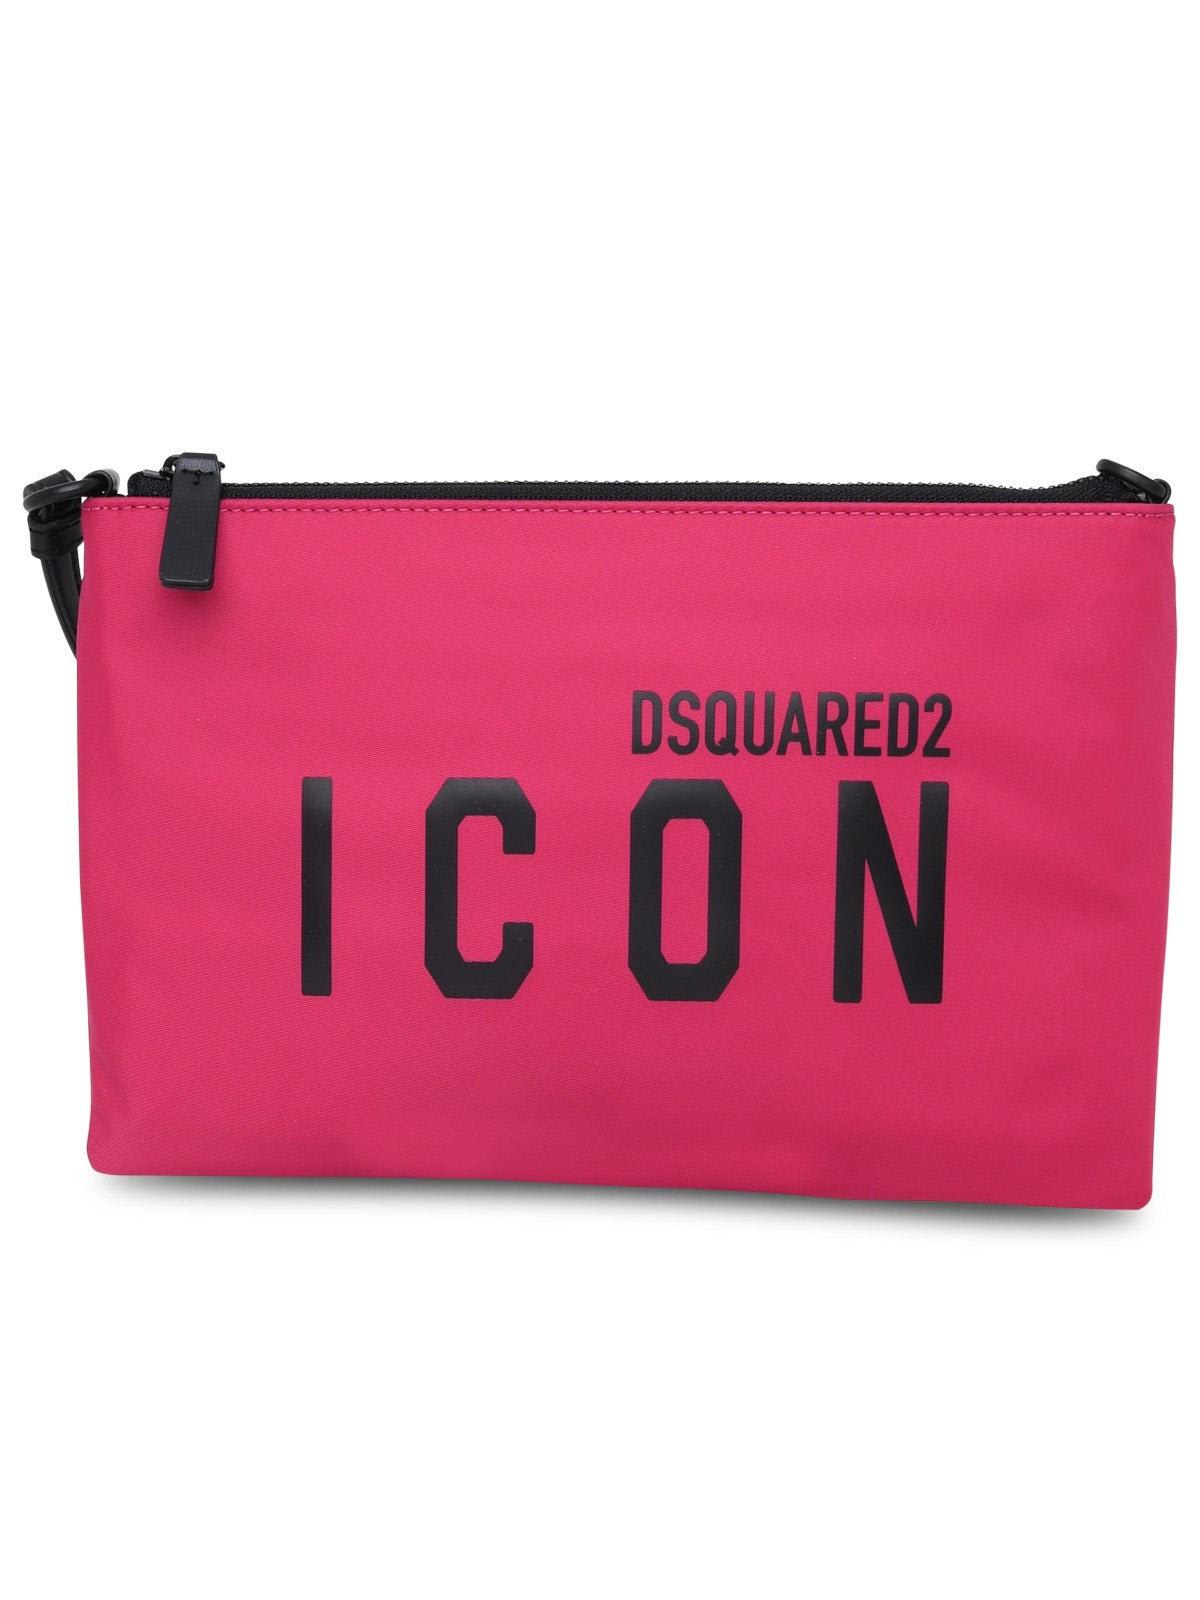 Dsquared2 Logo Printed Zipped Clutch Bag